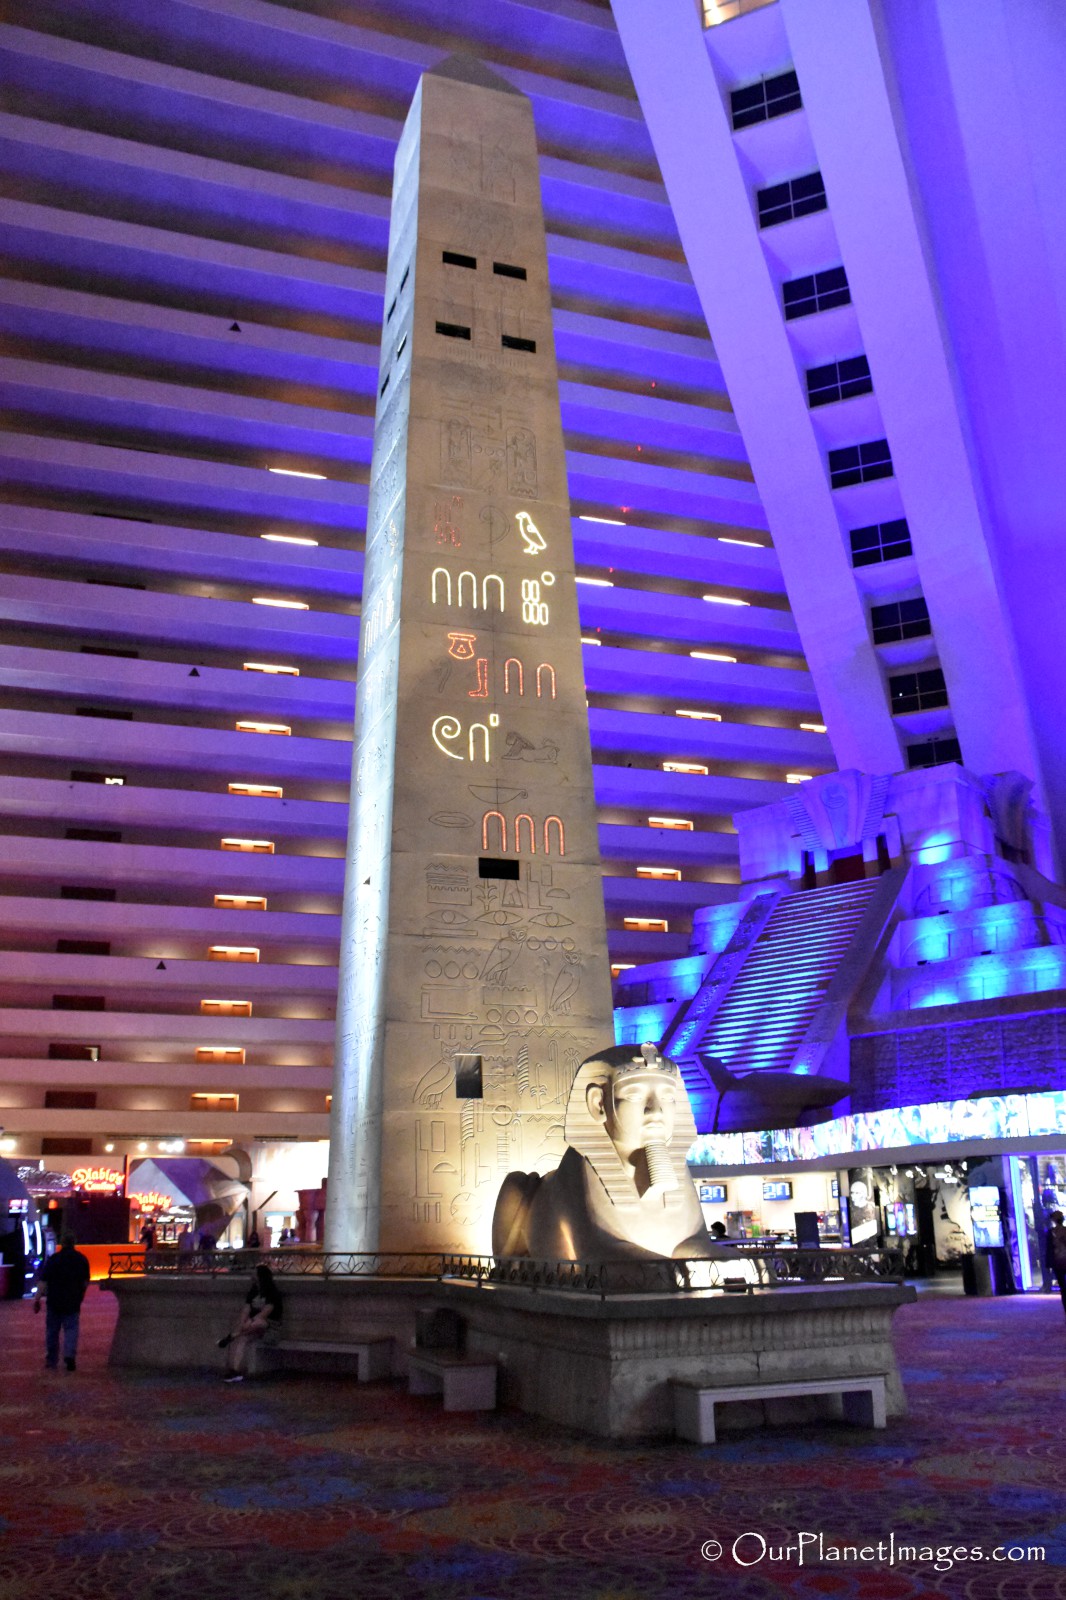 Luxor Hotel and Casino's new lighting feature illuminates the Las